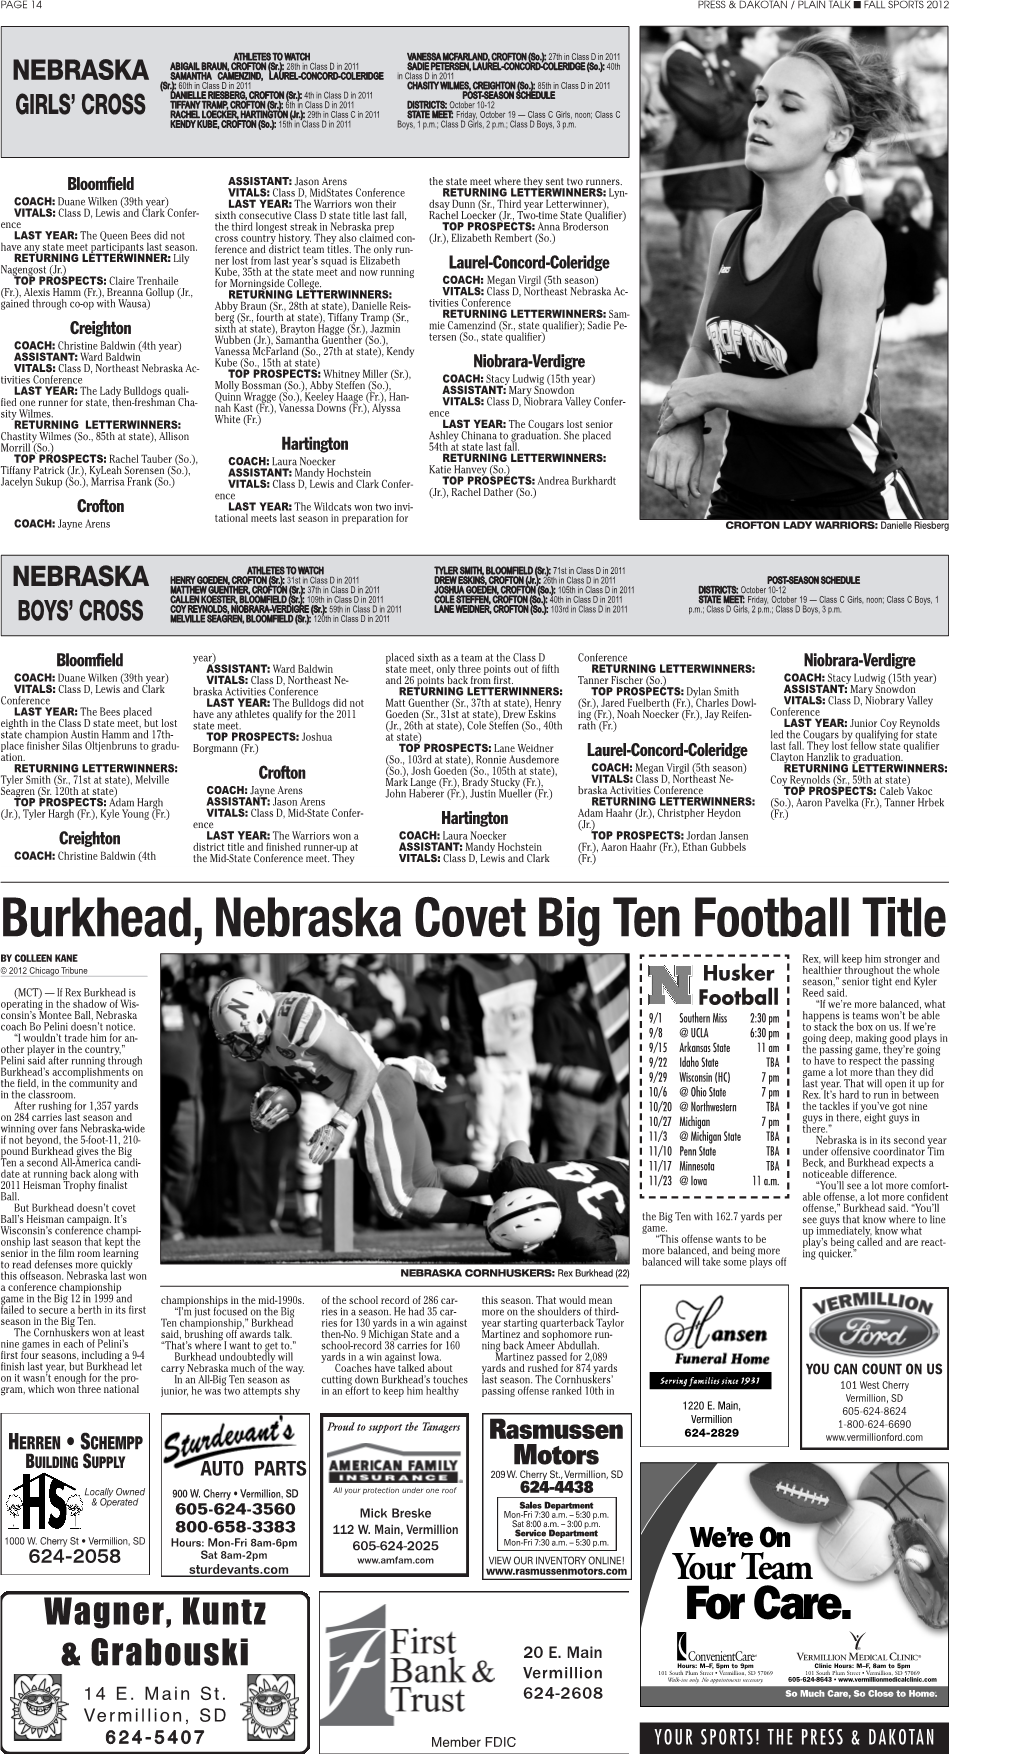 Burkhead, Nebraska Covet Big Ten Football Title